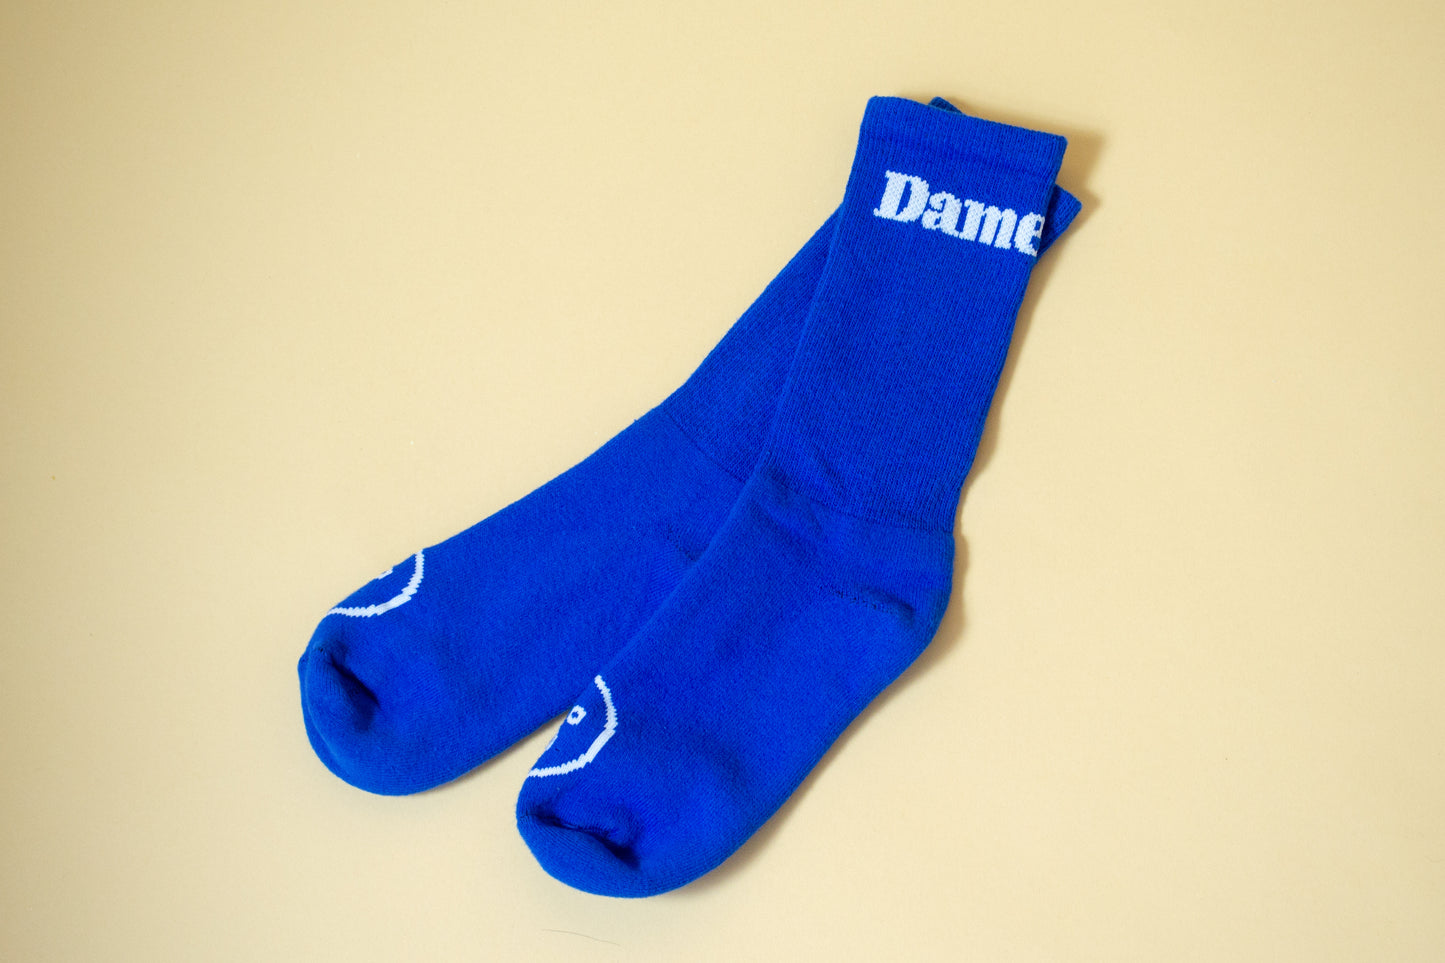 Dame Socks | A pair of bright blue Dame Socks on beige background